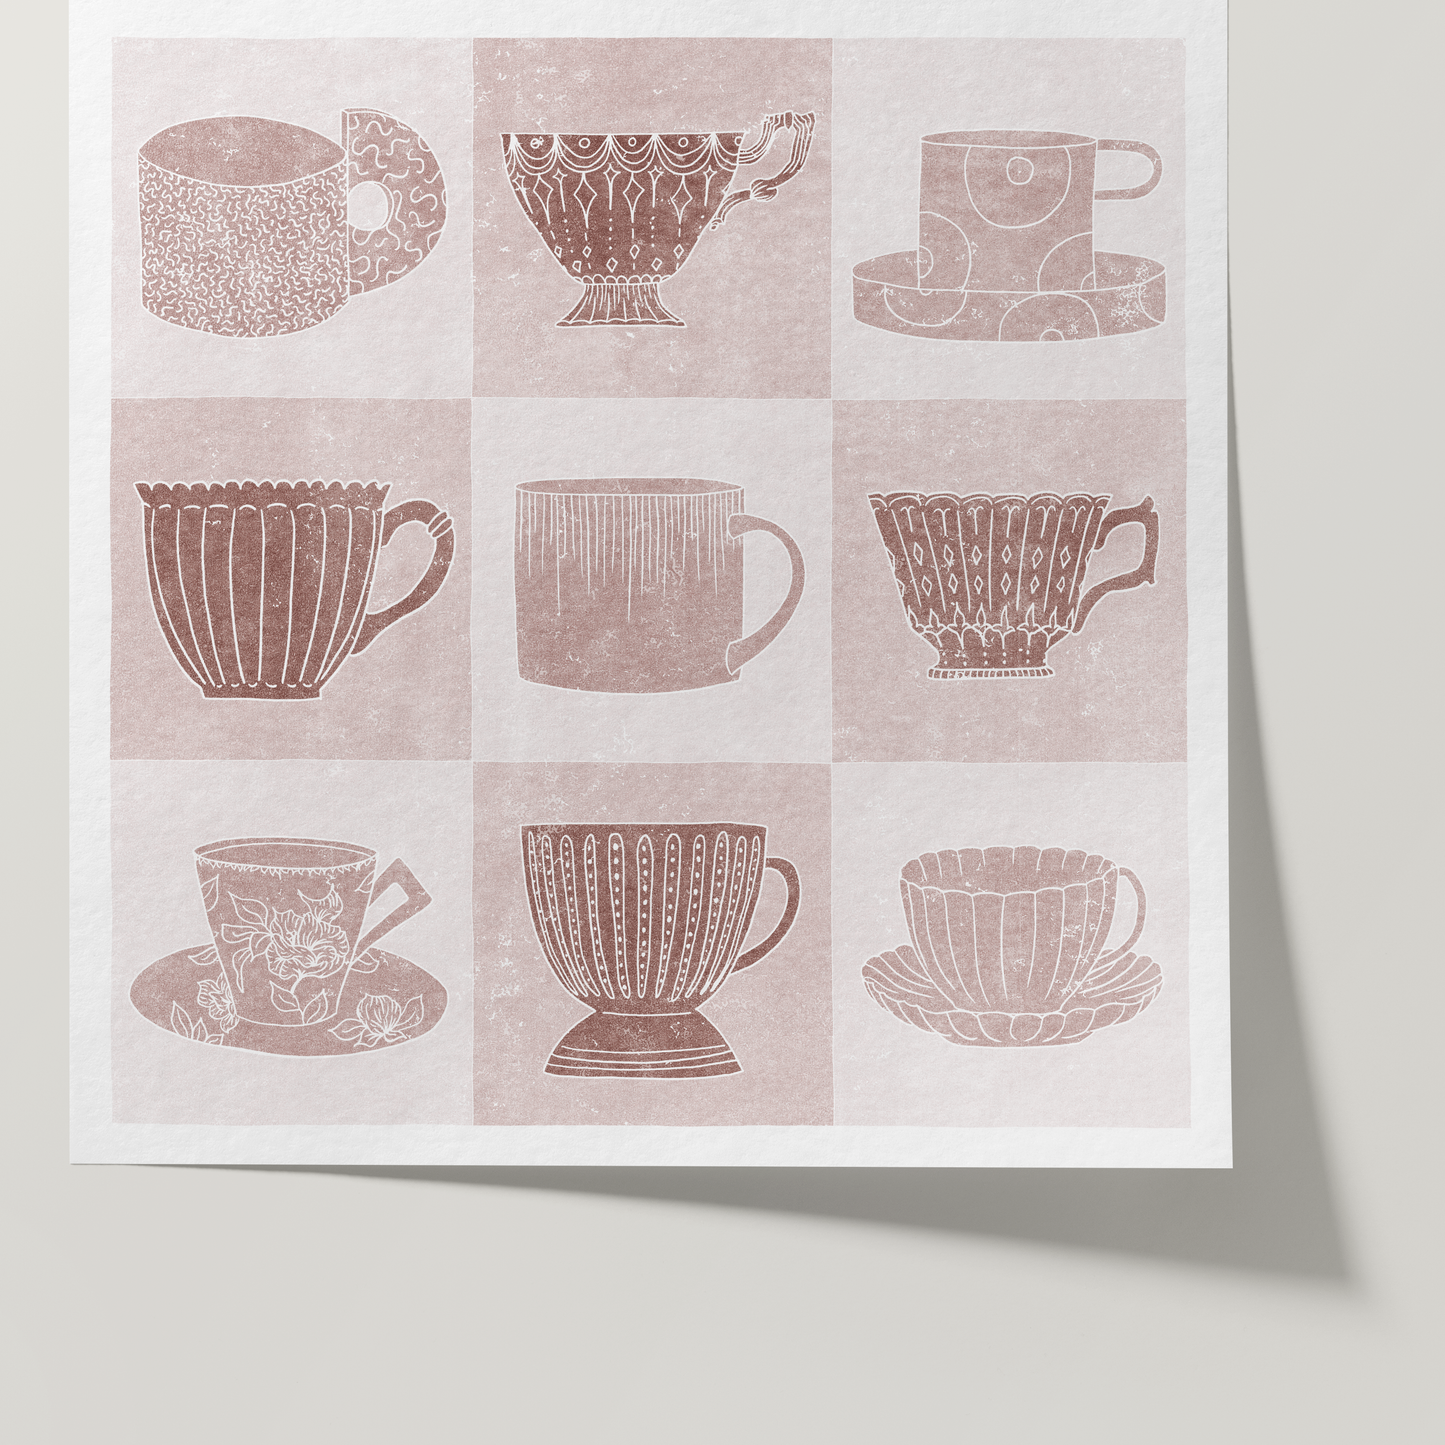 Home Decor Print - Giclee Print - Nature-inspired Prints - Teacups - Framed - Linocut Effect Illustration - Blush Pink - Hahnemühle German Etching Paper - Front